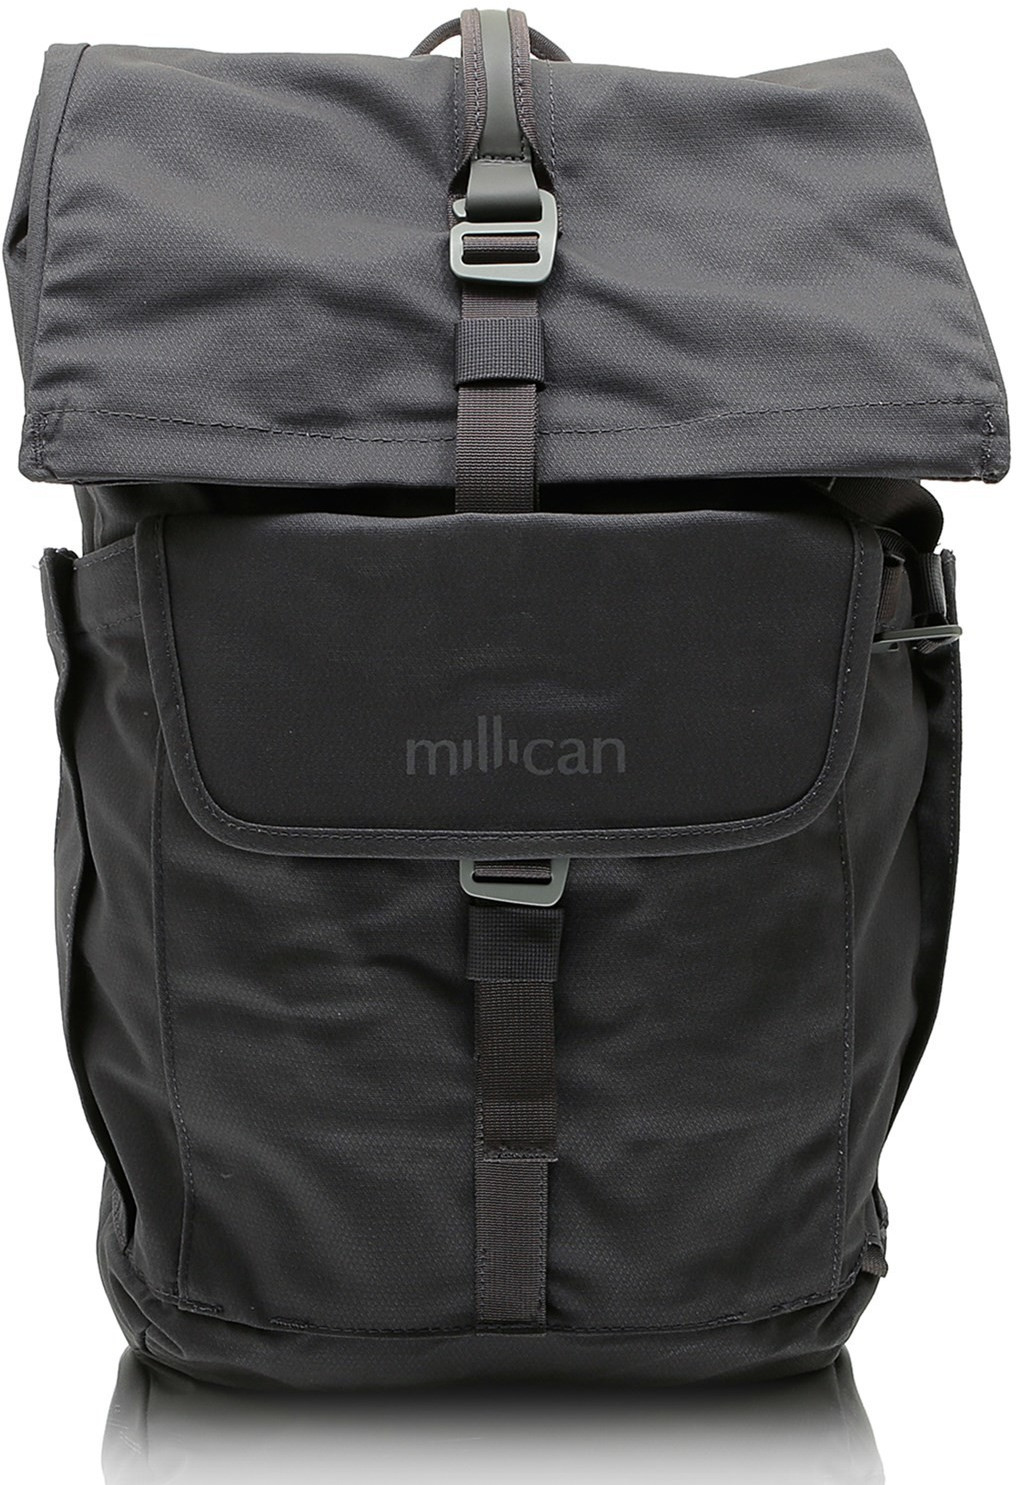 Millican Smith The Roll Pack 25L graphite ab 164,95 € Preisvergleich bei idealo.de